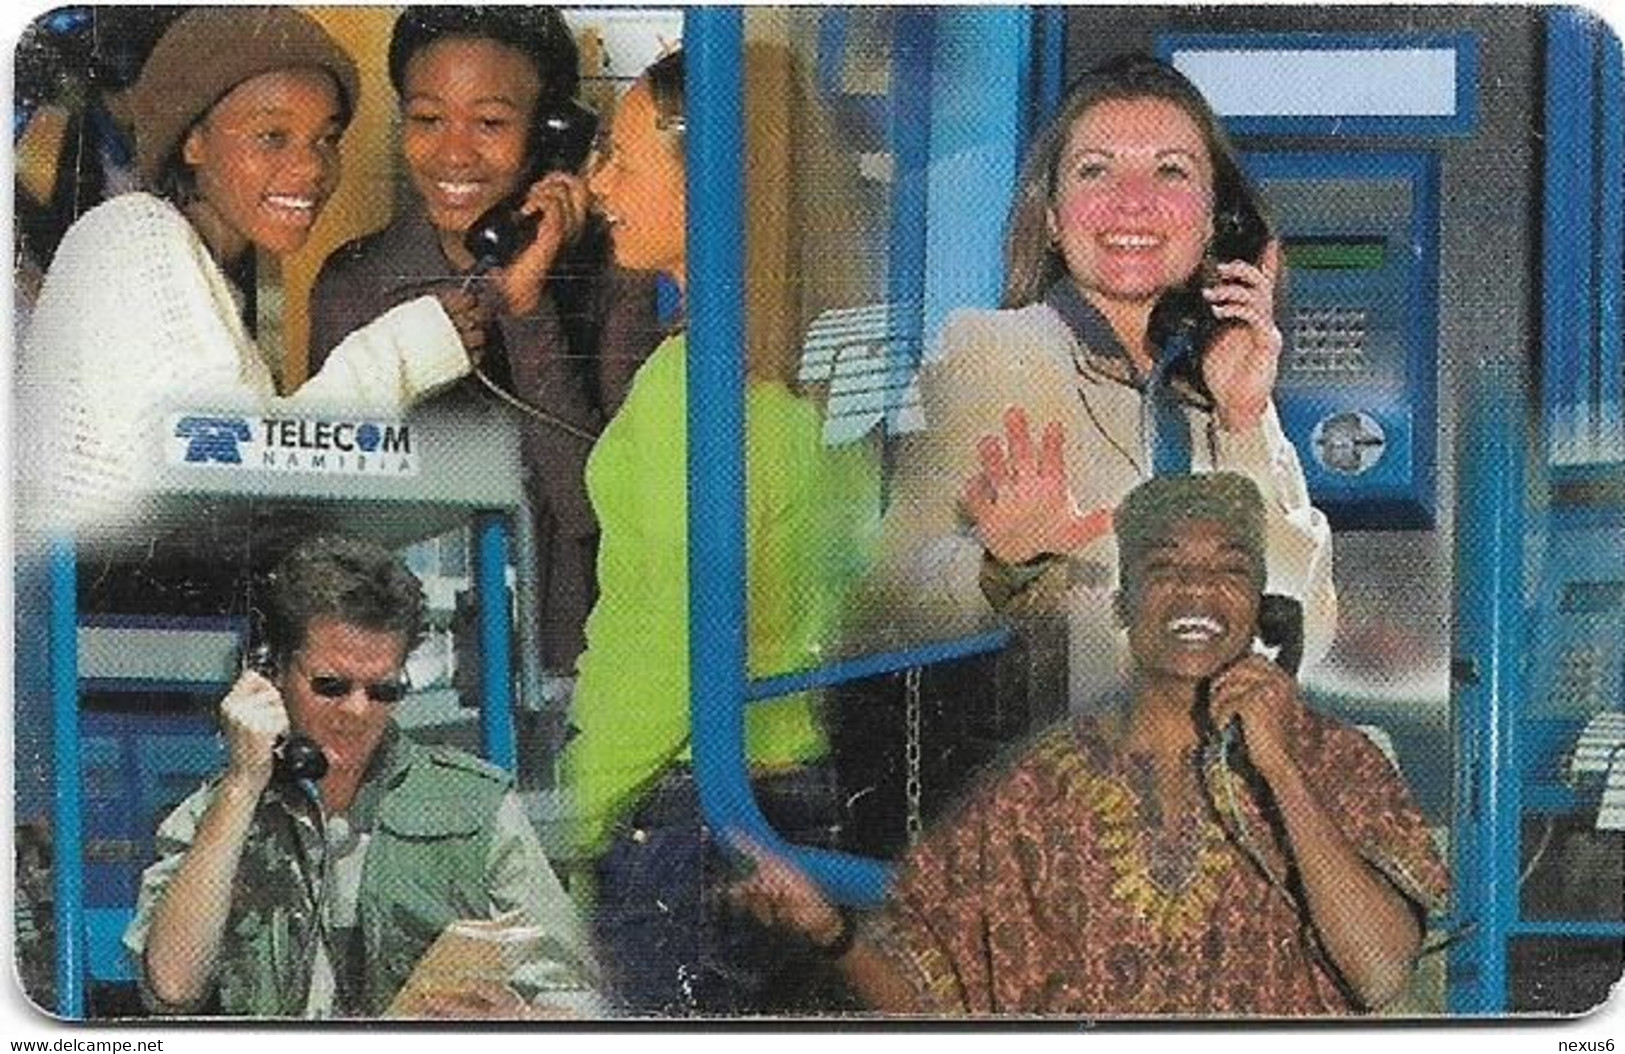 Namibia - Telecom Namibia - 10th Anniversary - People Phoning, Chip Solaic, Black CN., 2003, 20+2$, Used - Namibia